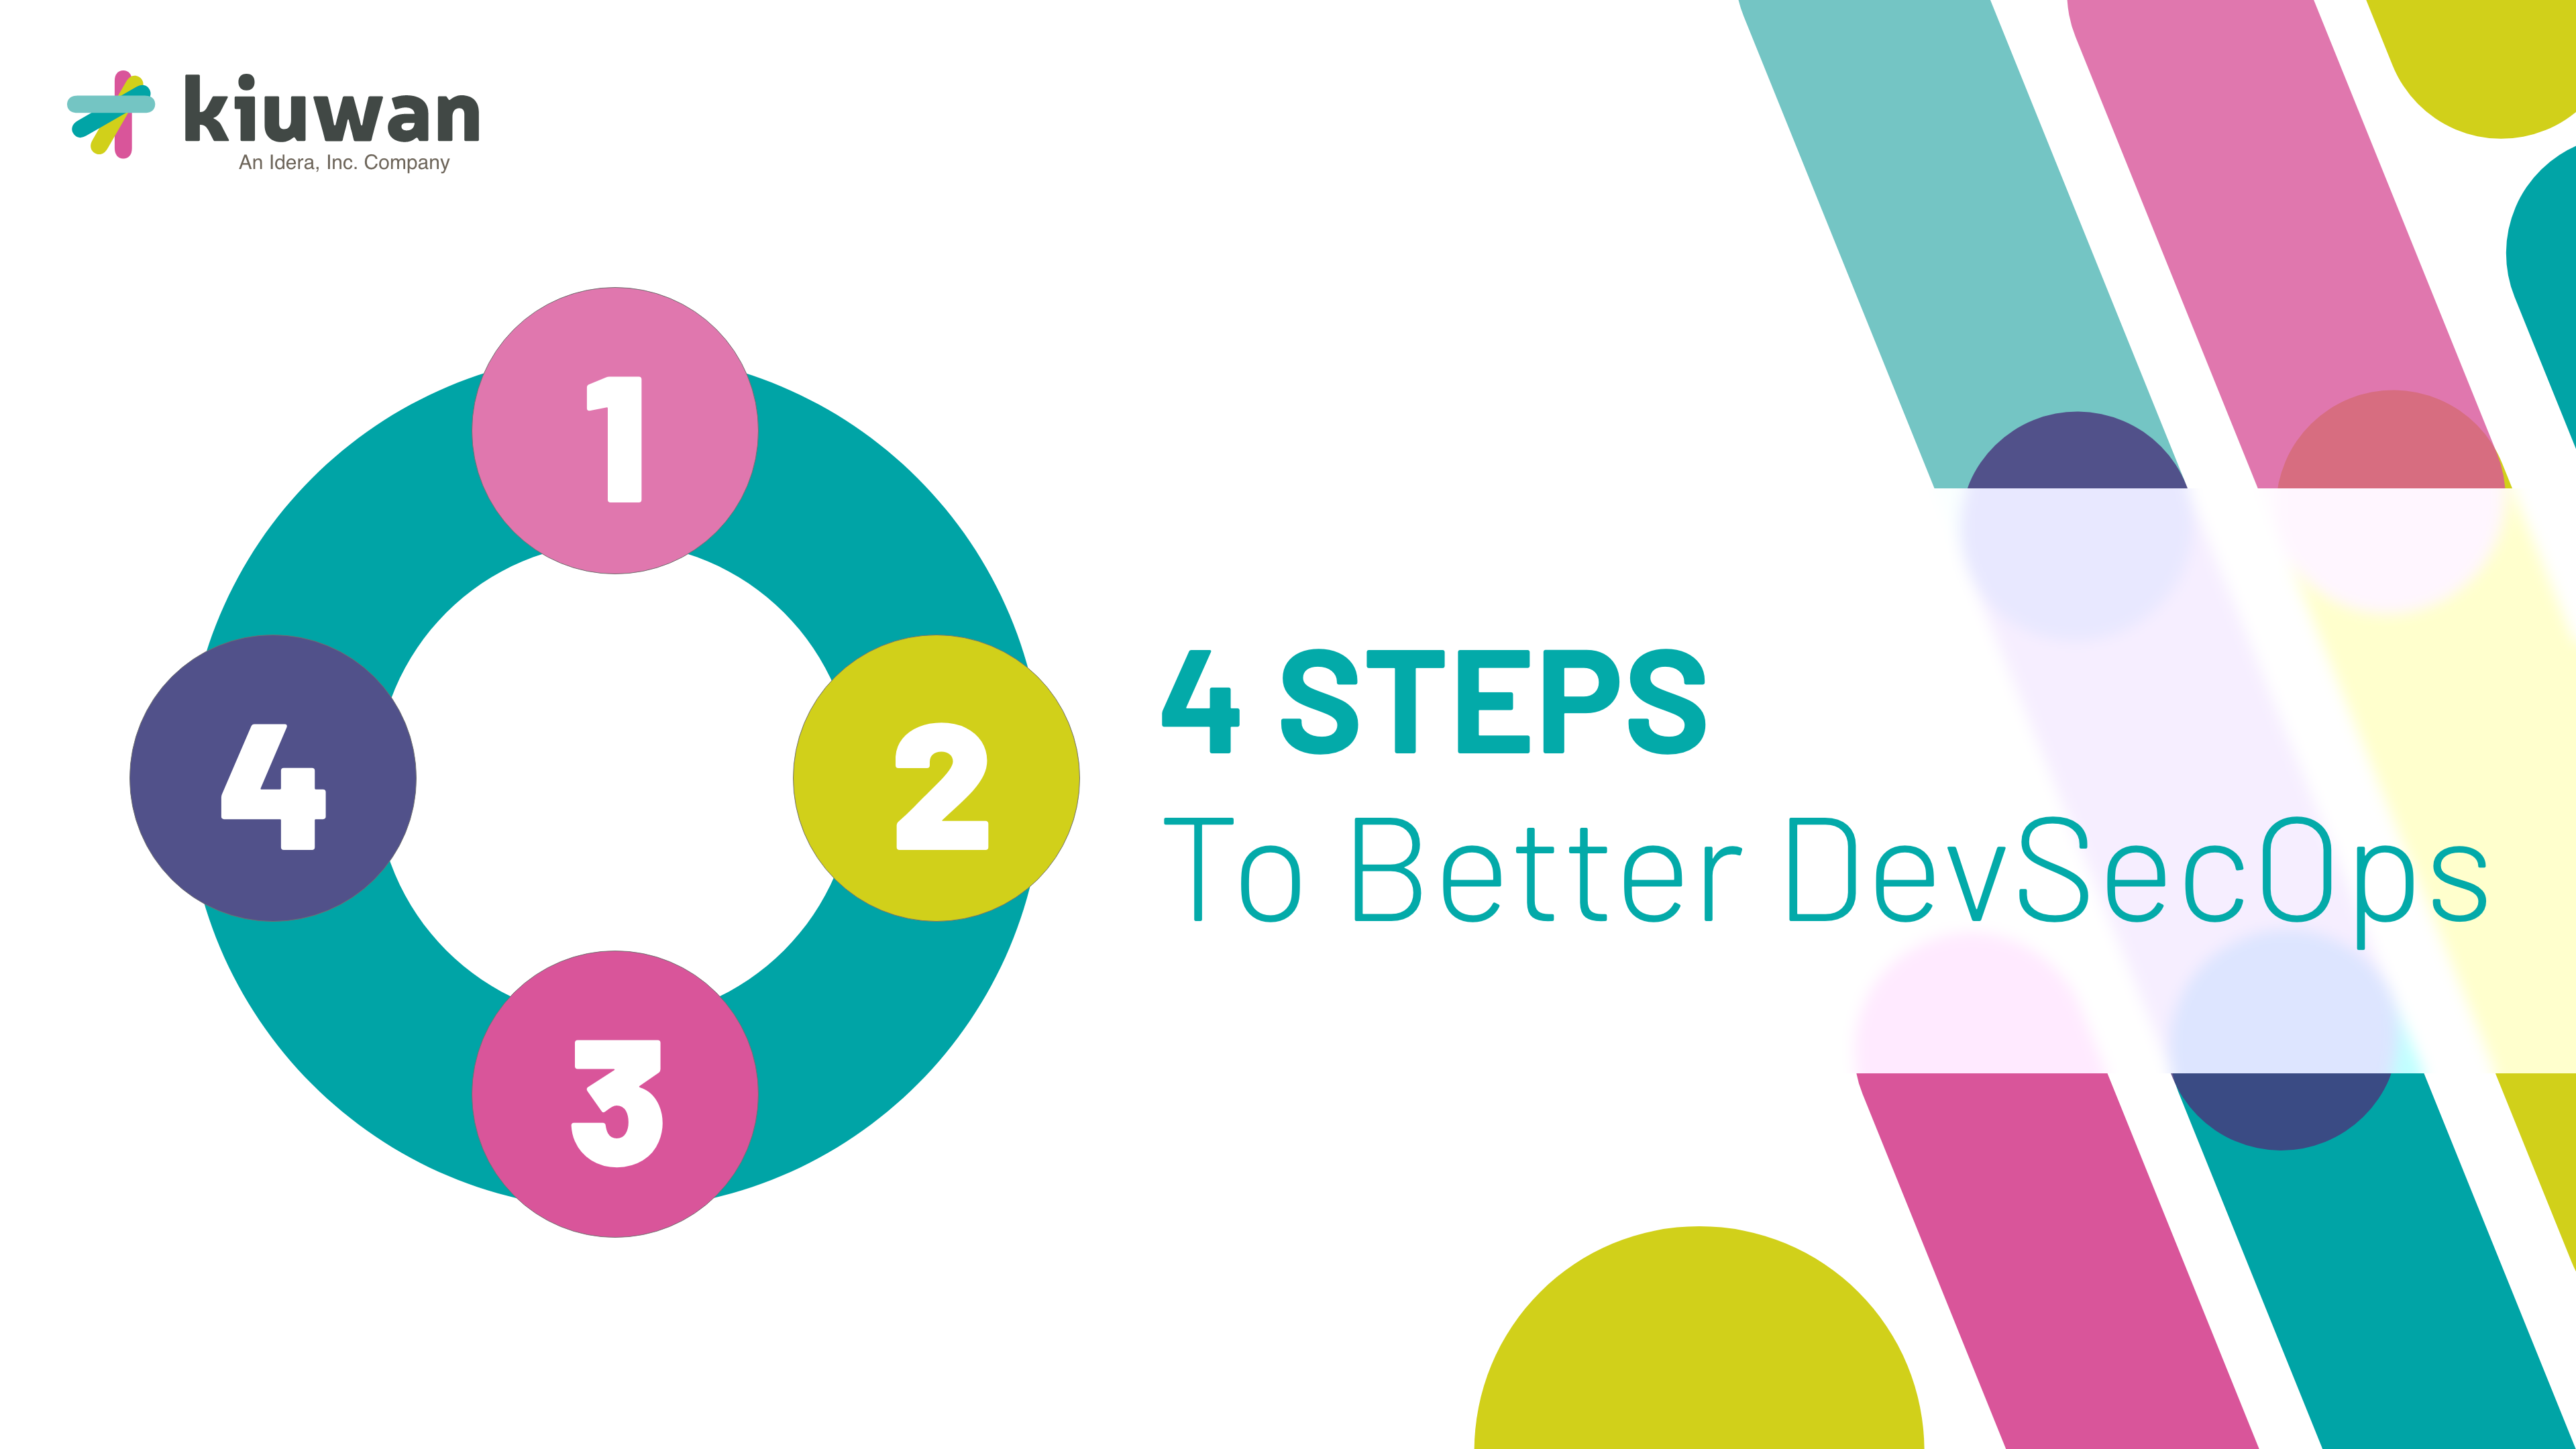 4 Steps To Better DevSecOps